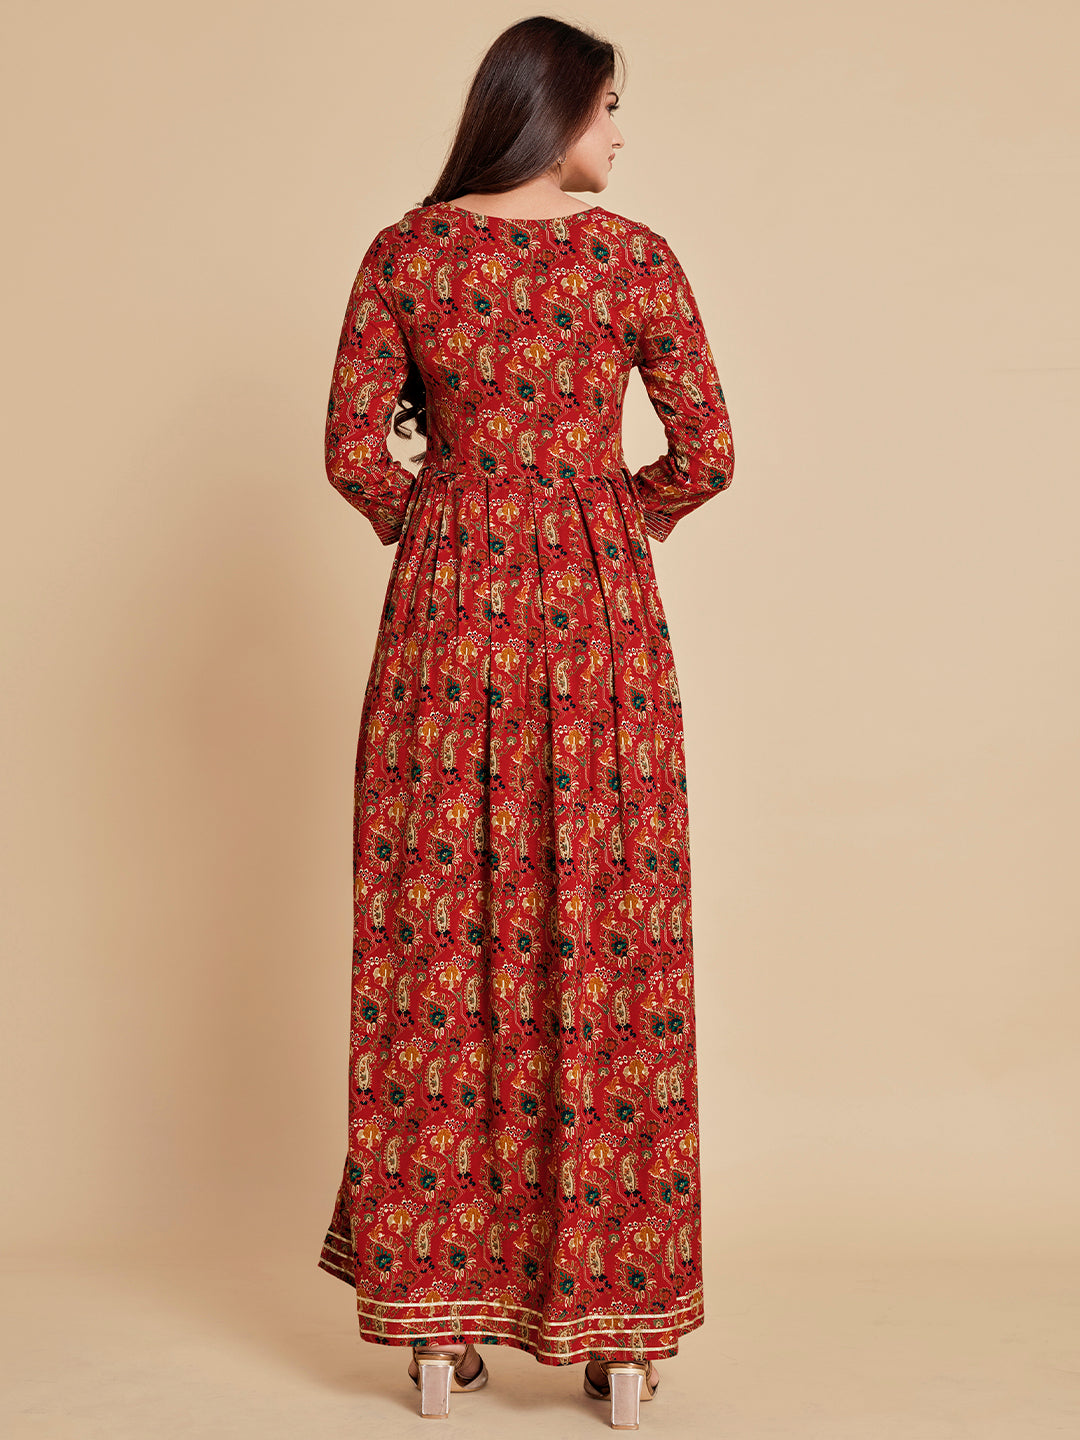 Paisley Print Flared Dress - ARH884R